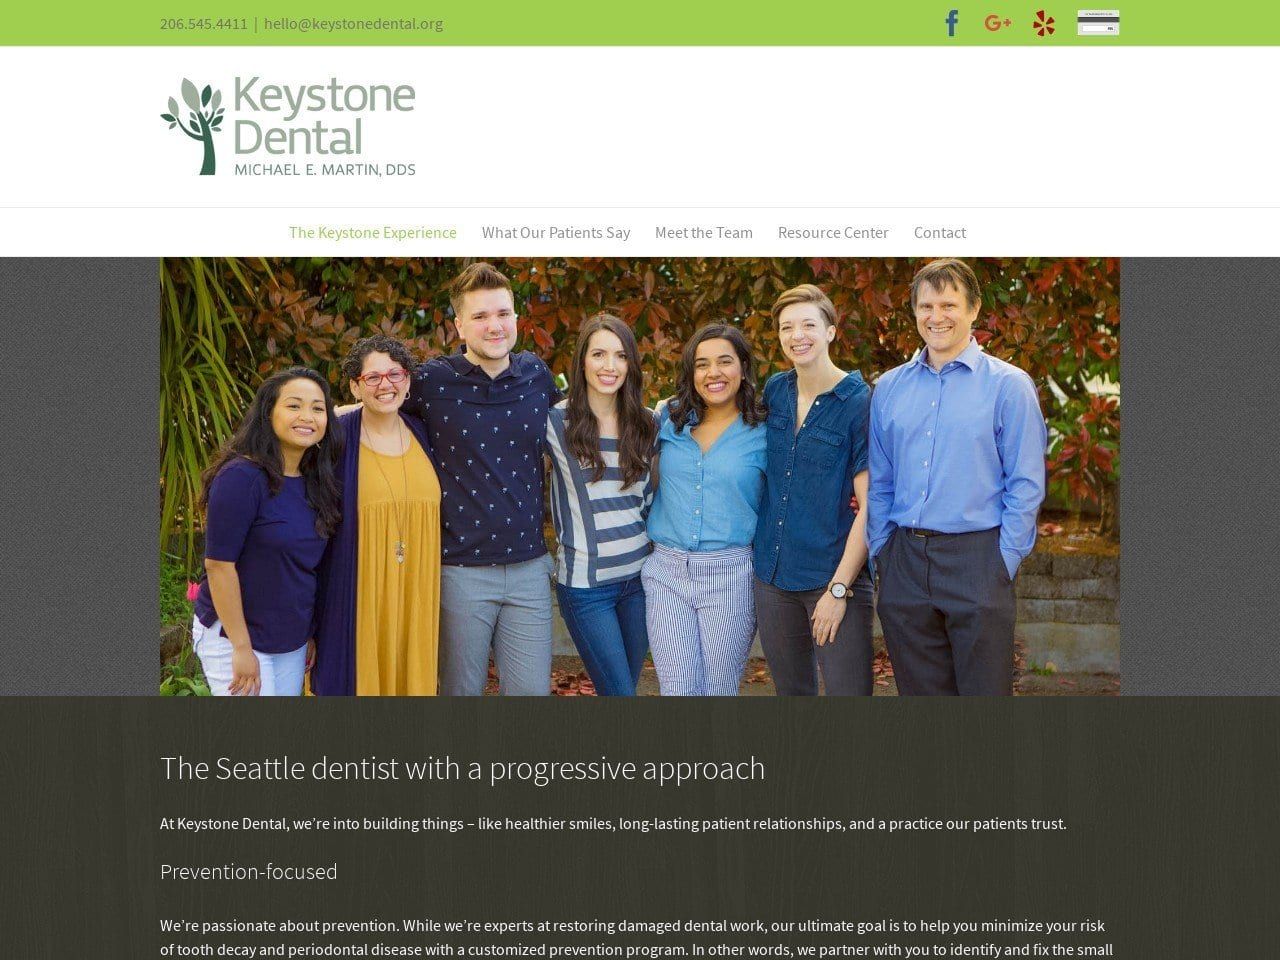 Keystone Dental Website Screenshot from michaelmartindds.com